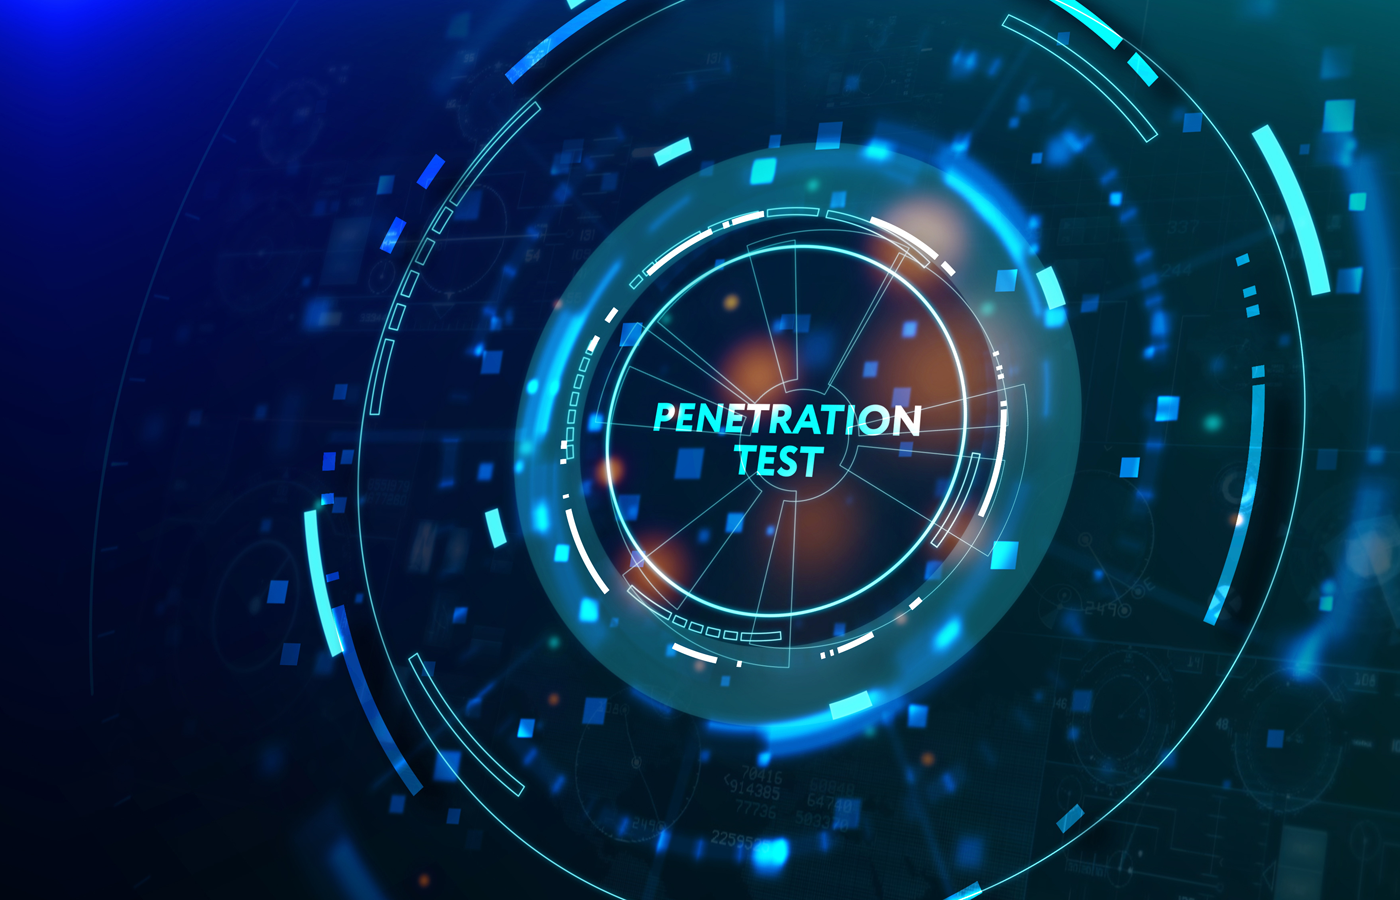 Penetration test inscription on a digital background.